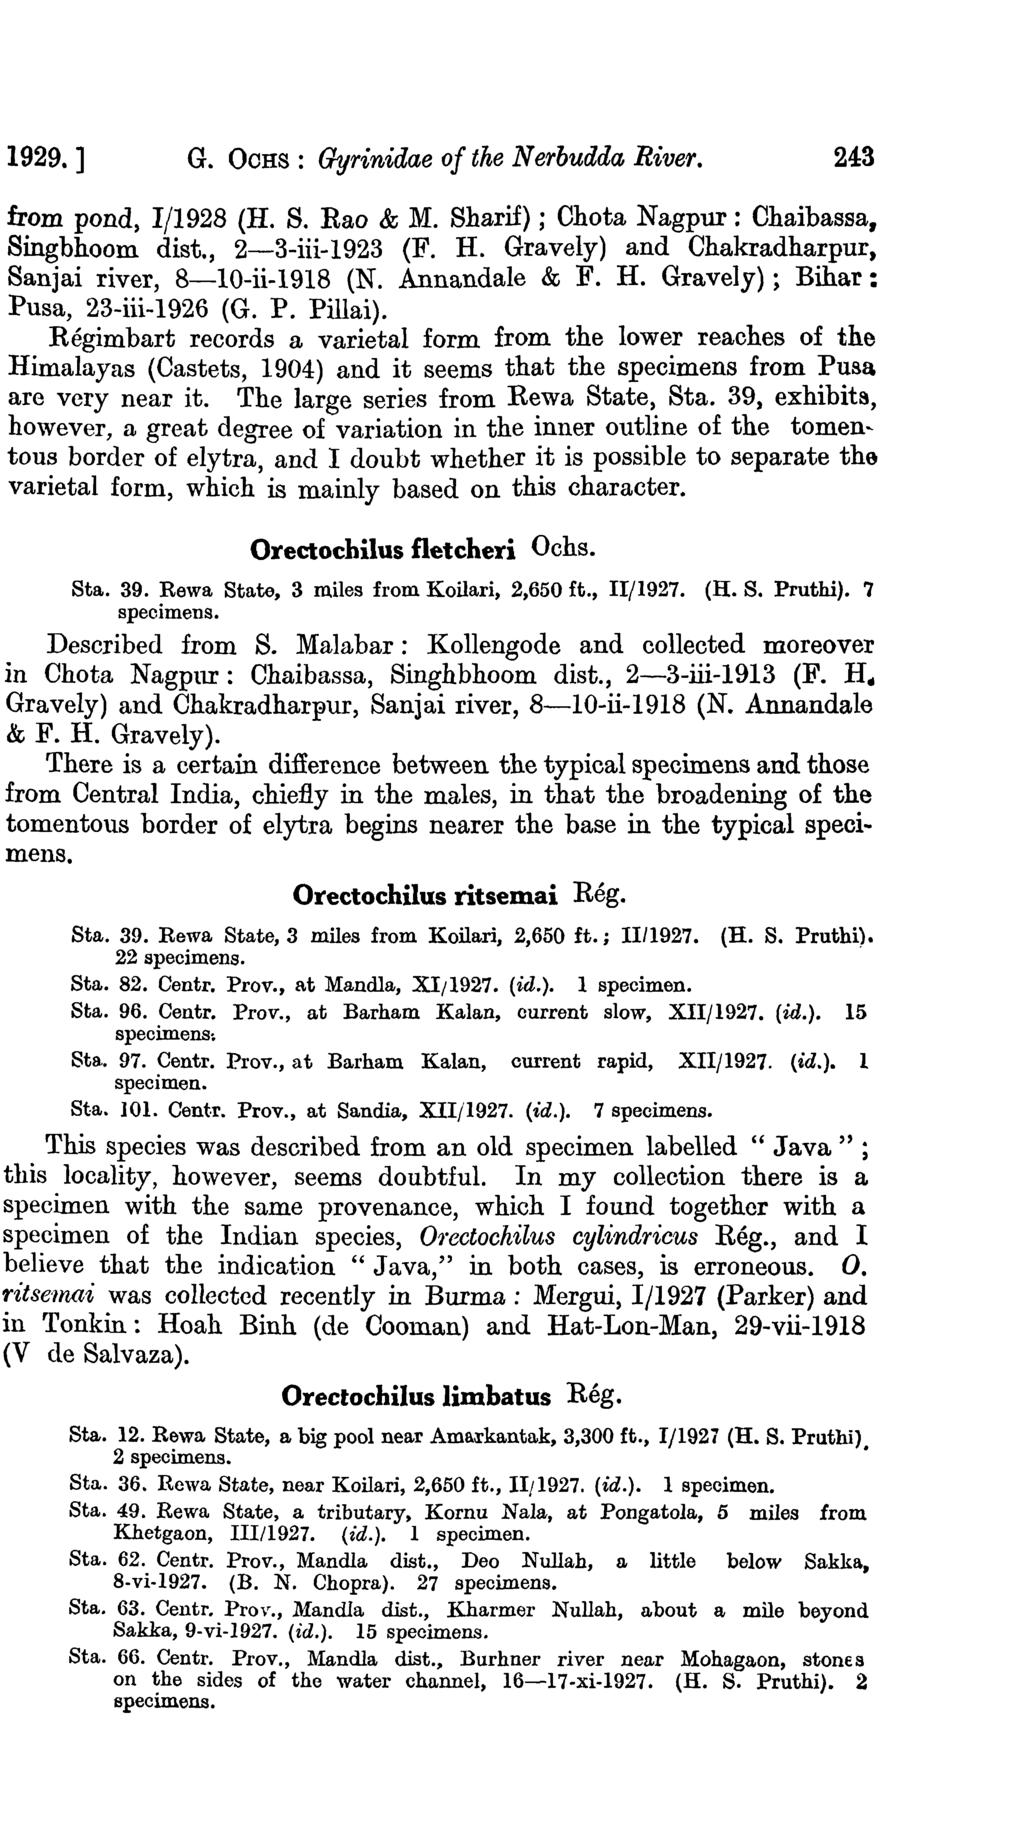 1929.] G. OCHS: Gyrinidae of the N erbudda River. 243 from pond, I/1928 (H. S. Rao & M. Sharif) ; Chota Nagpur: Chaibassa, Singbhoom dist., 2-3-iii-1923 (F. H.